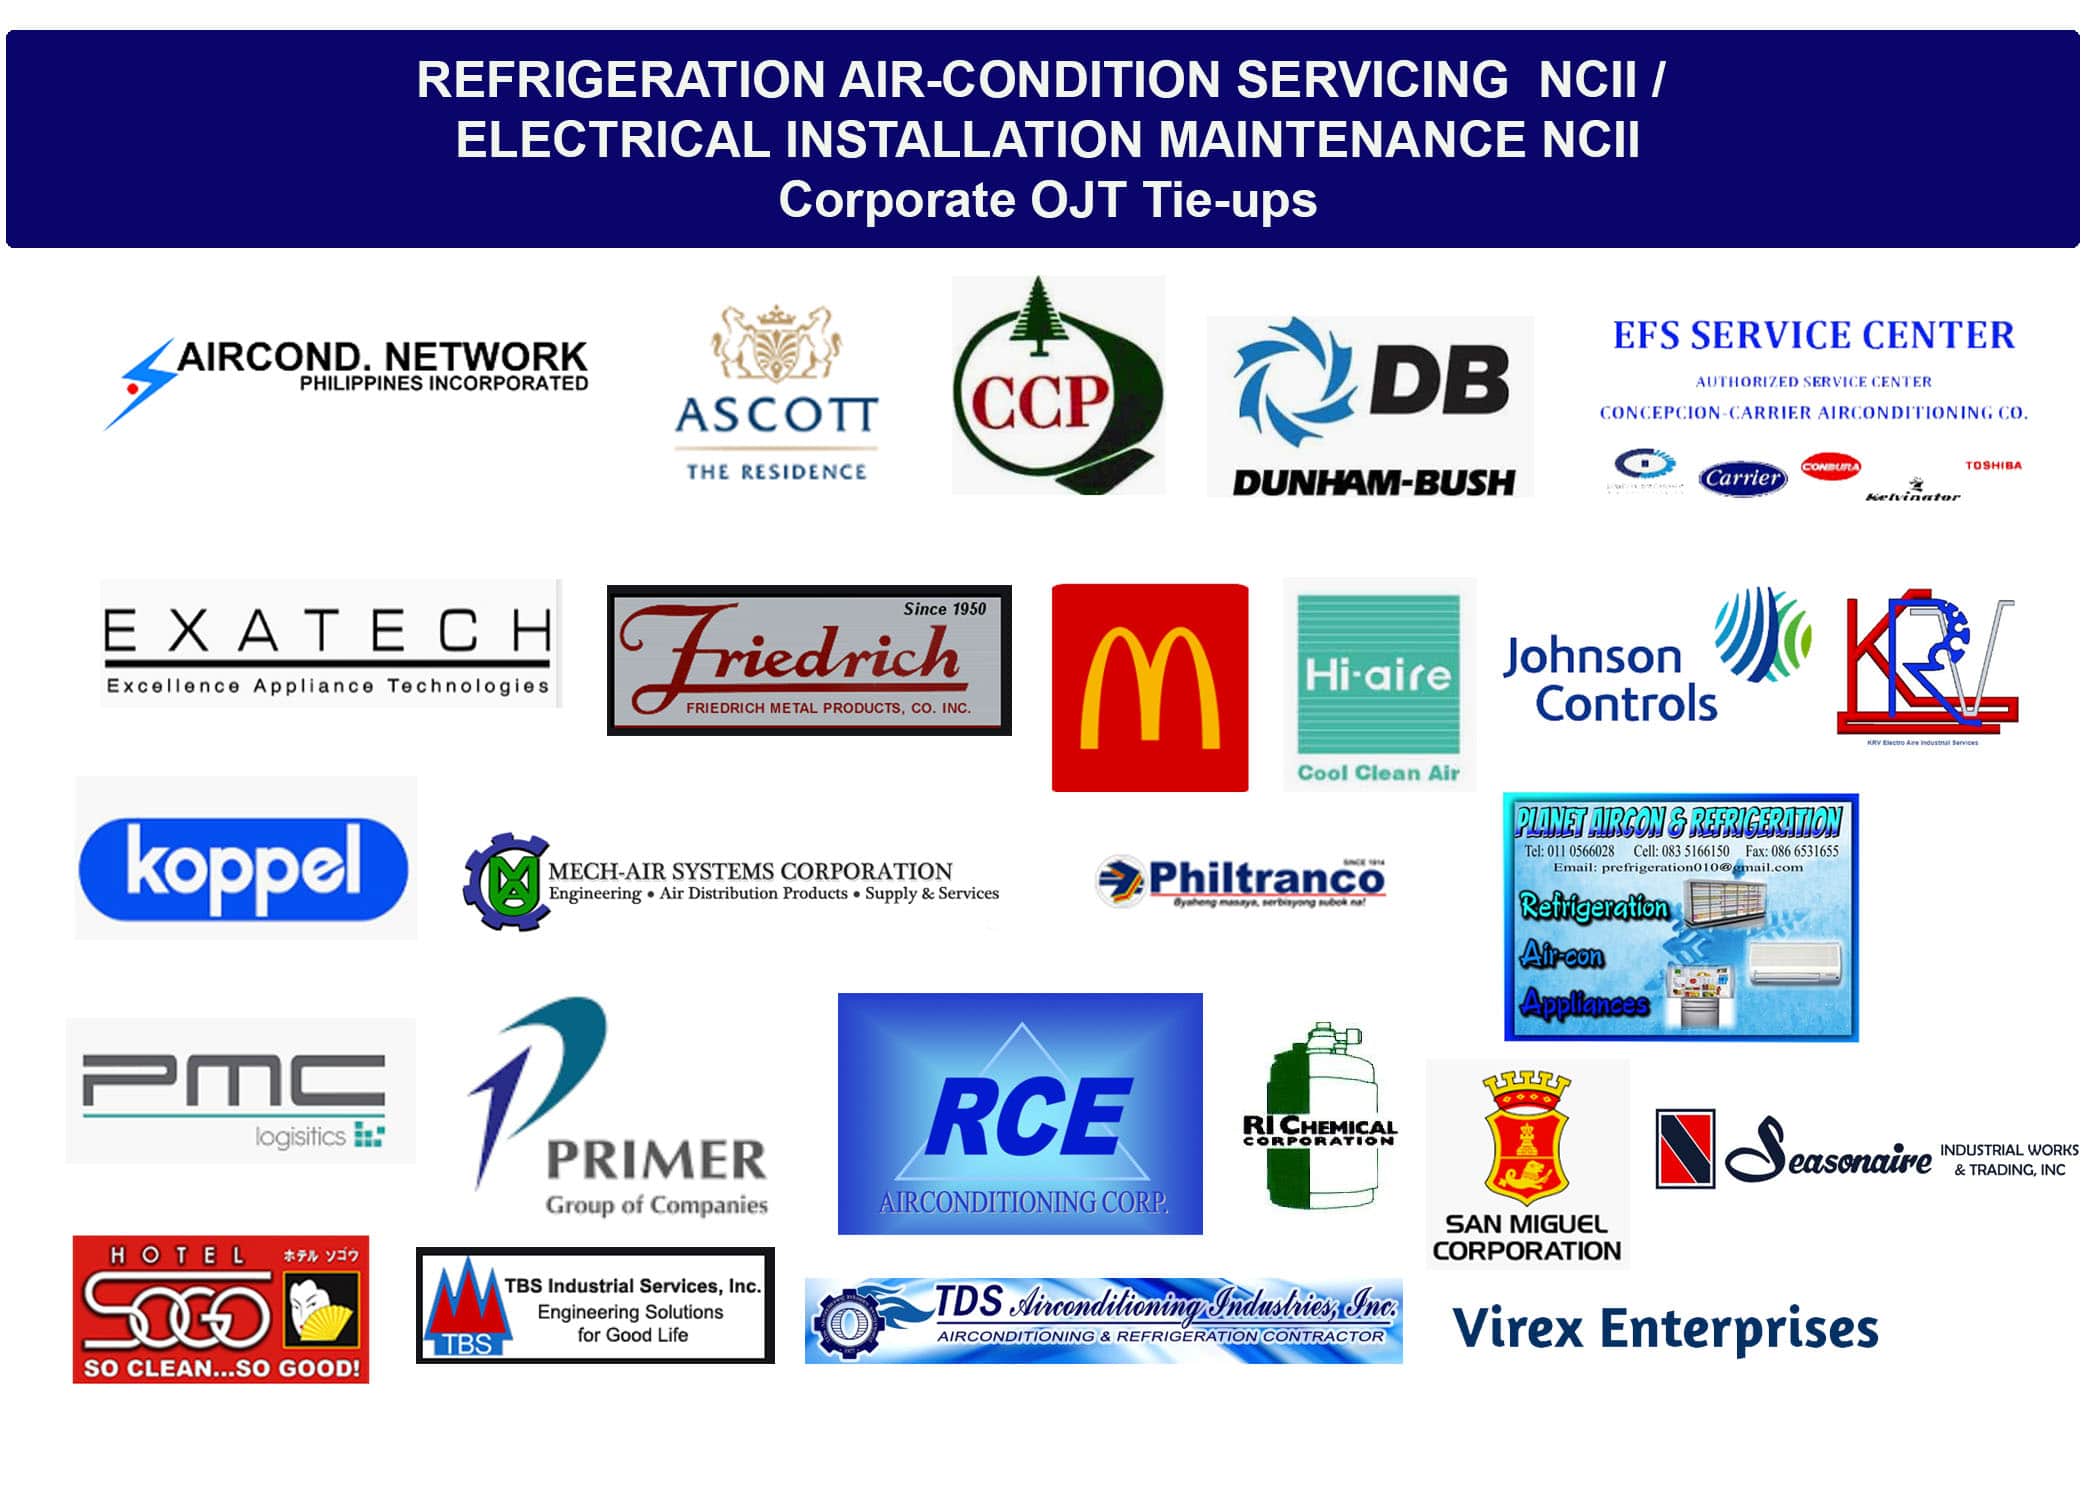 REFRIGERATION AIR-CONDITION SERVICING NCII and ELECTRICAL INSTALLATION MAINTENANCE NCII